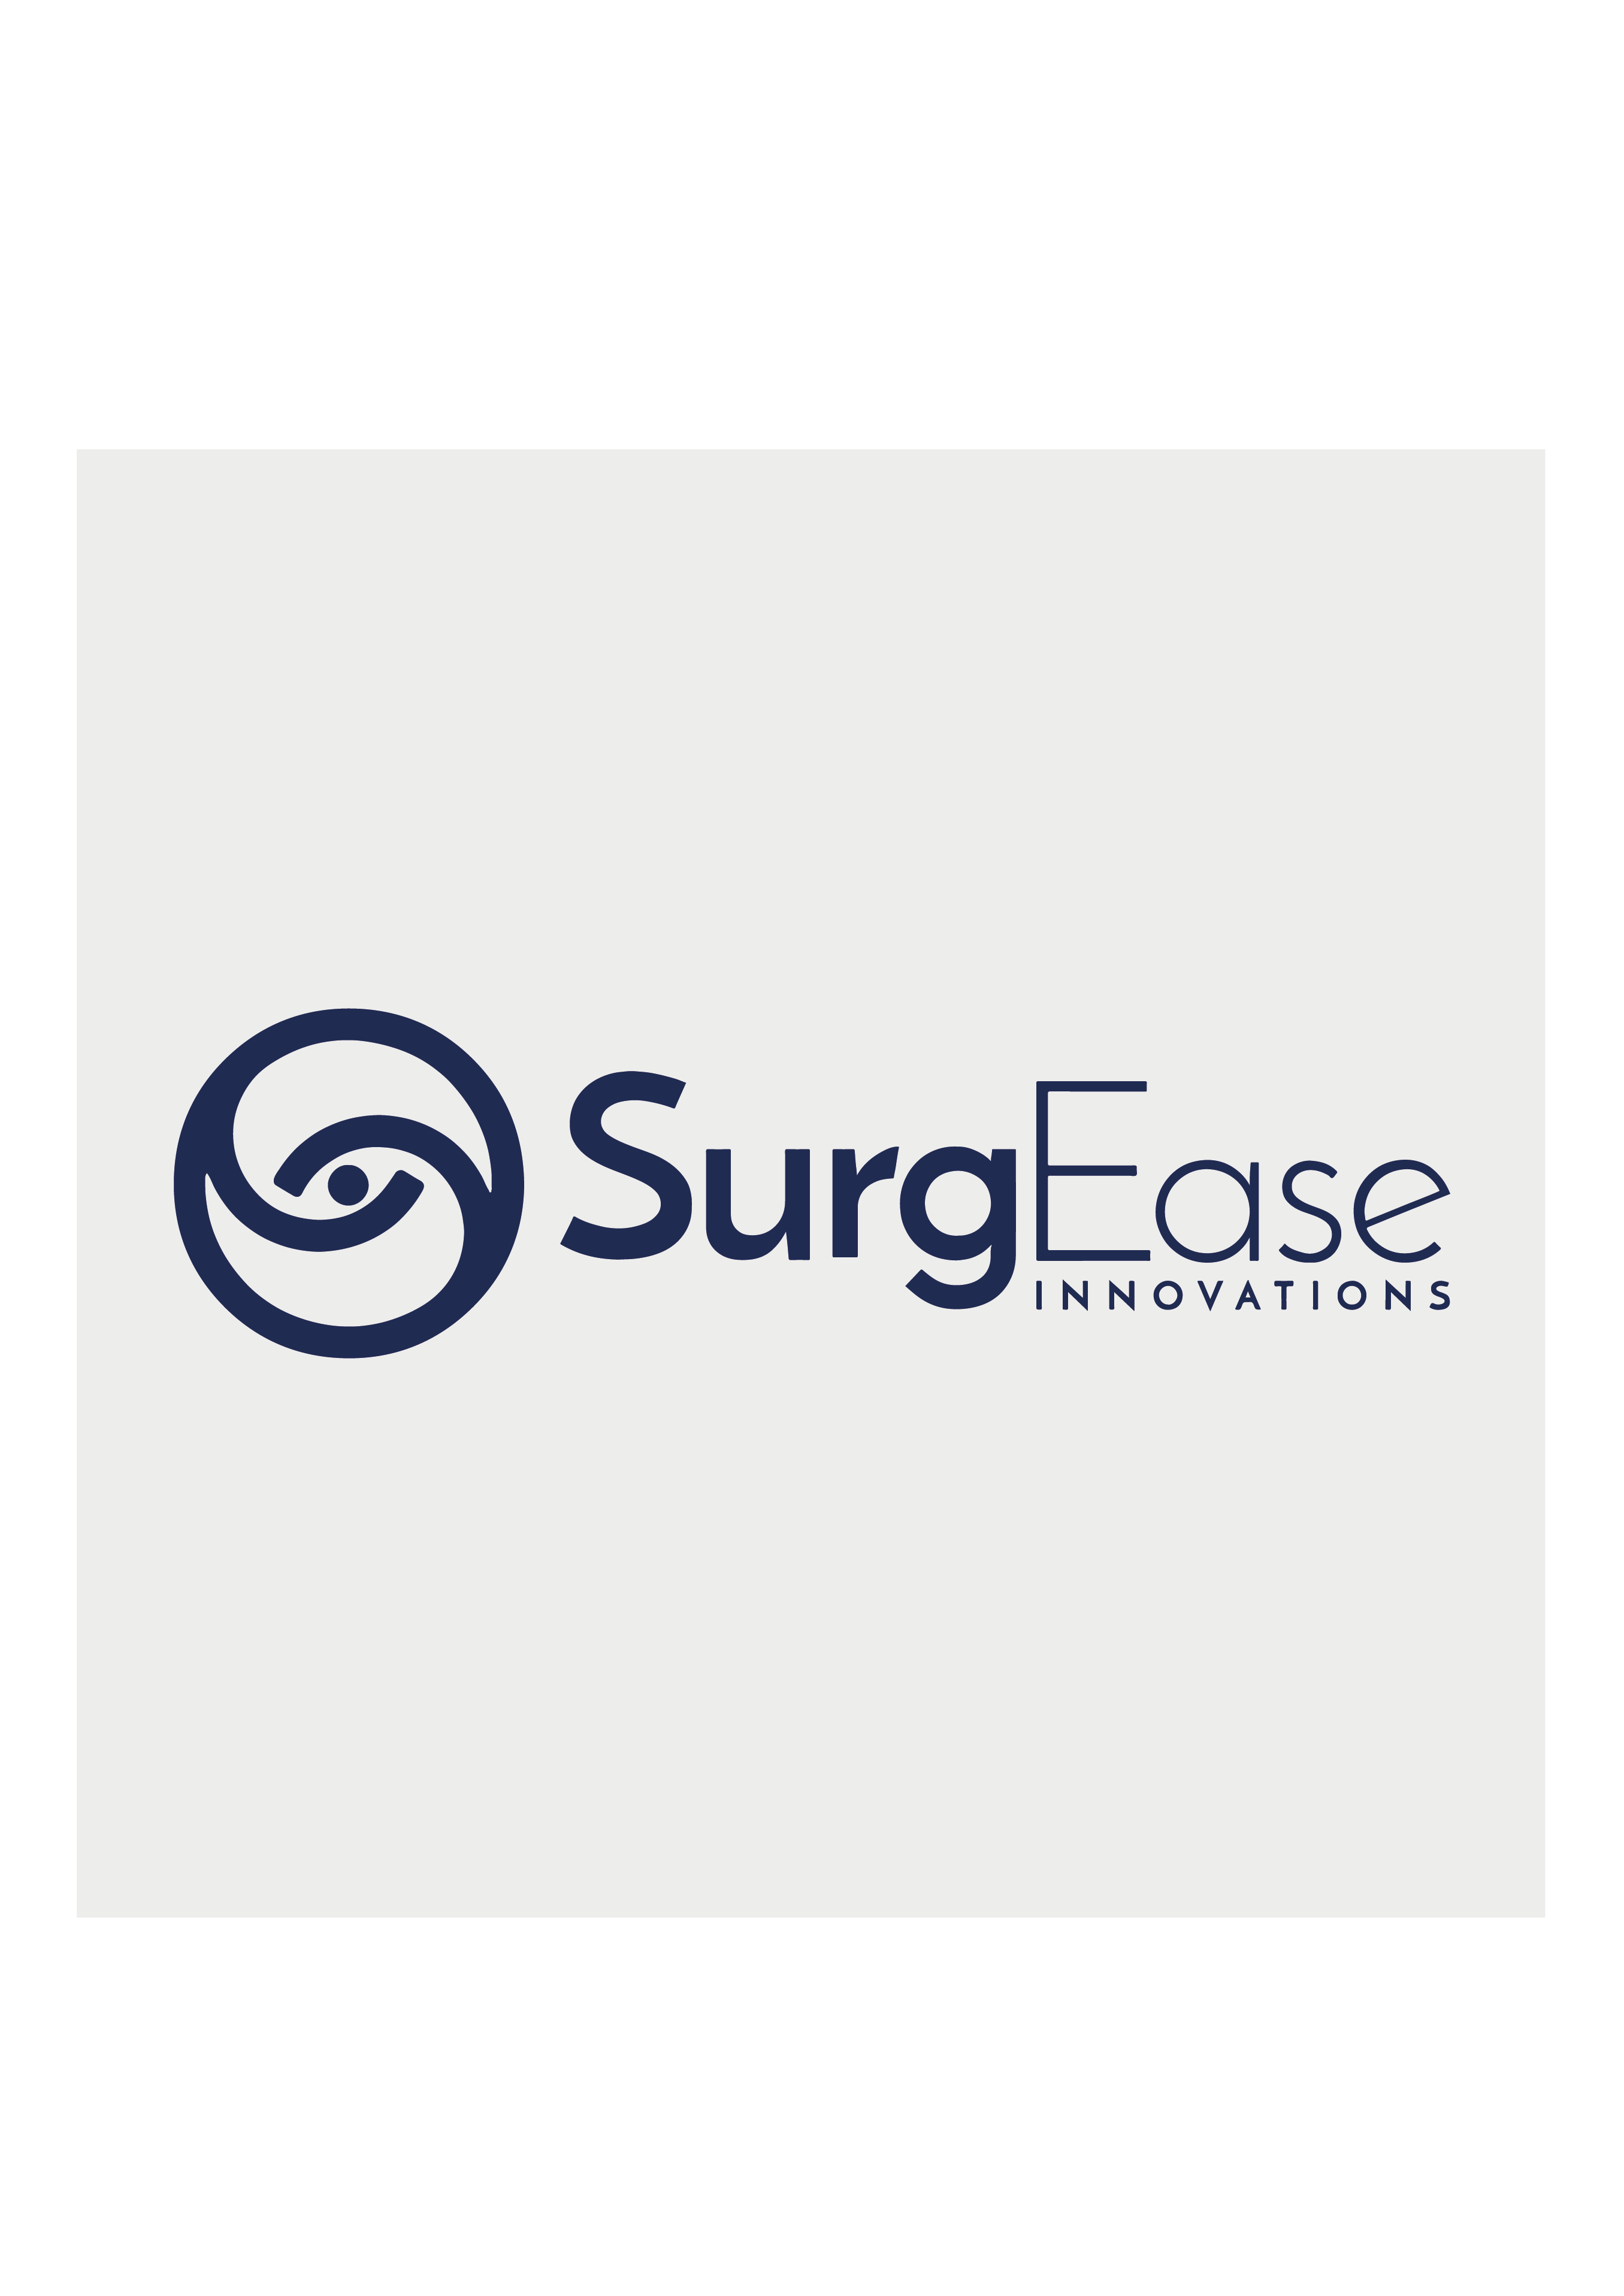 SurgEase Innovations